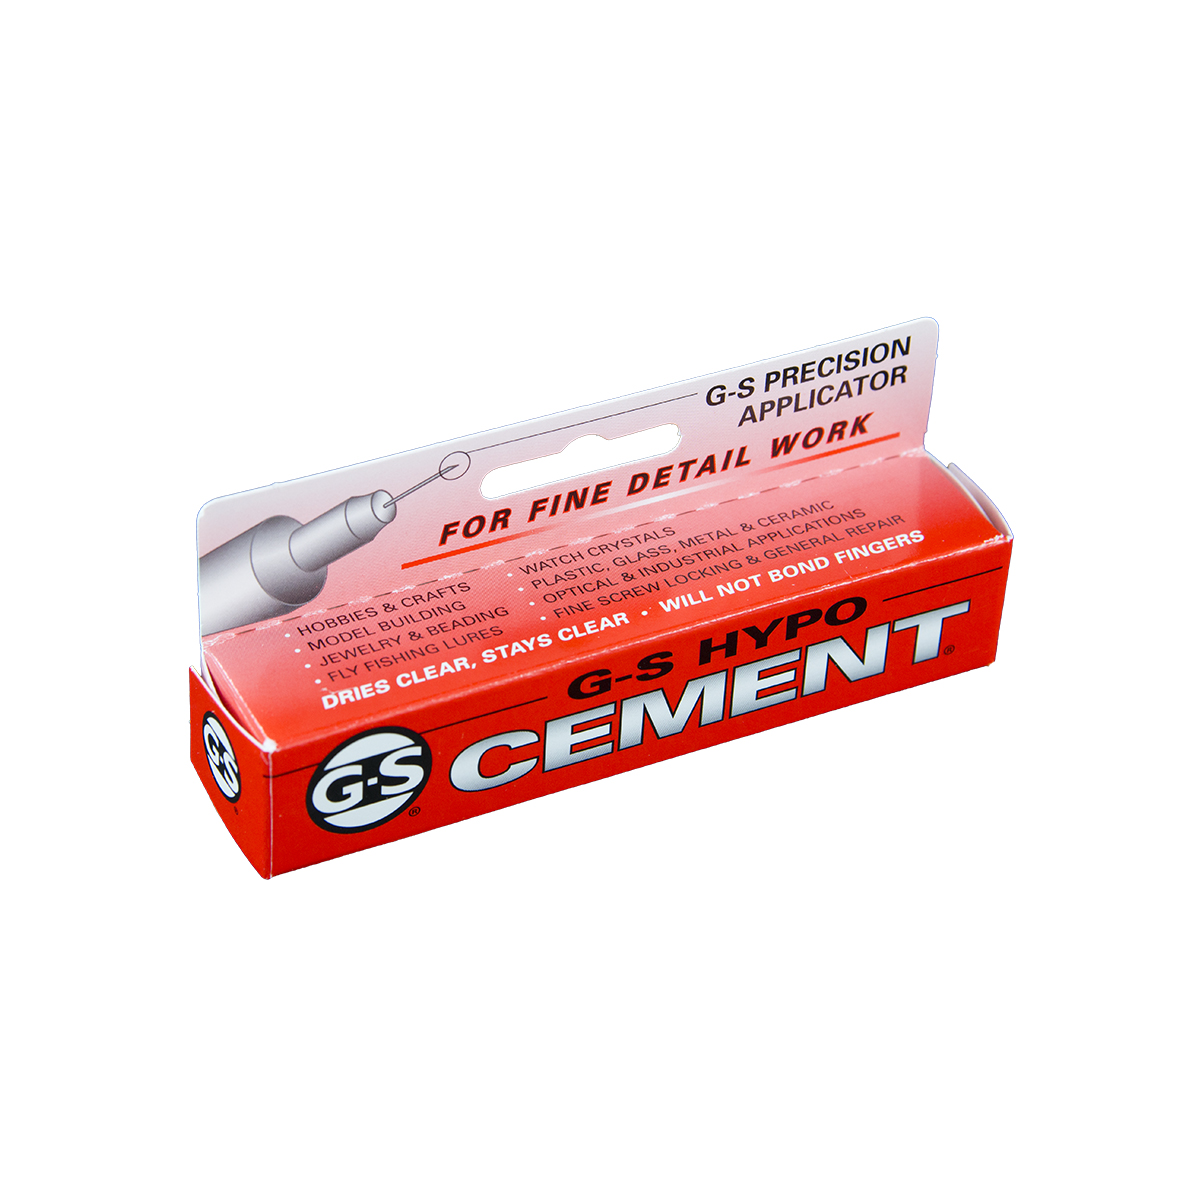 GS Hypo Cement Needle Nose Glue 9ml 